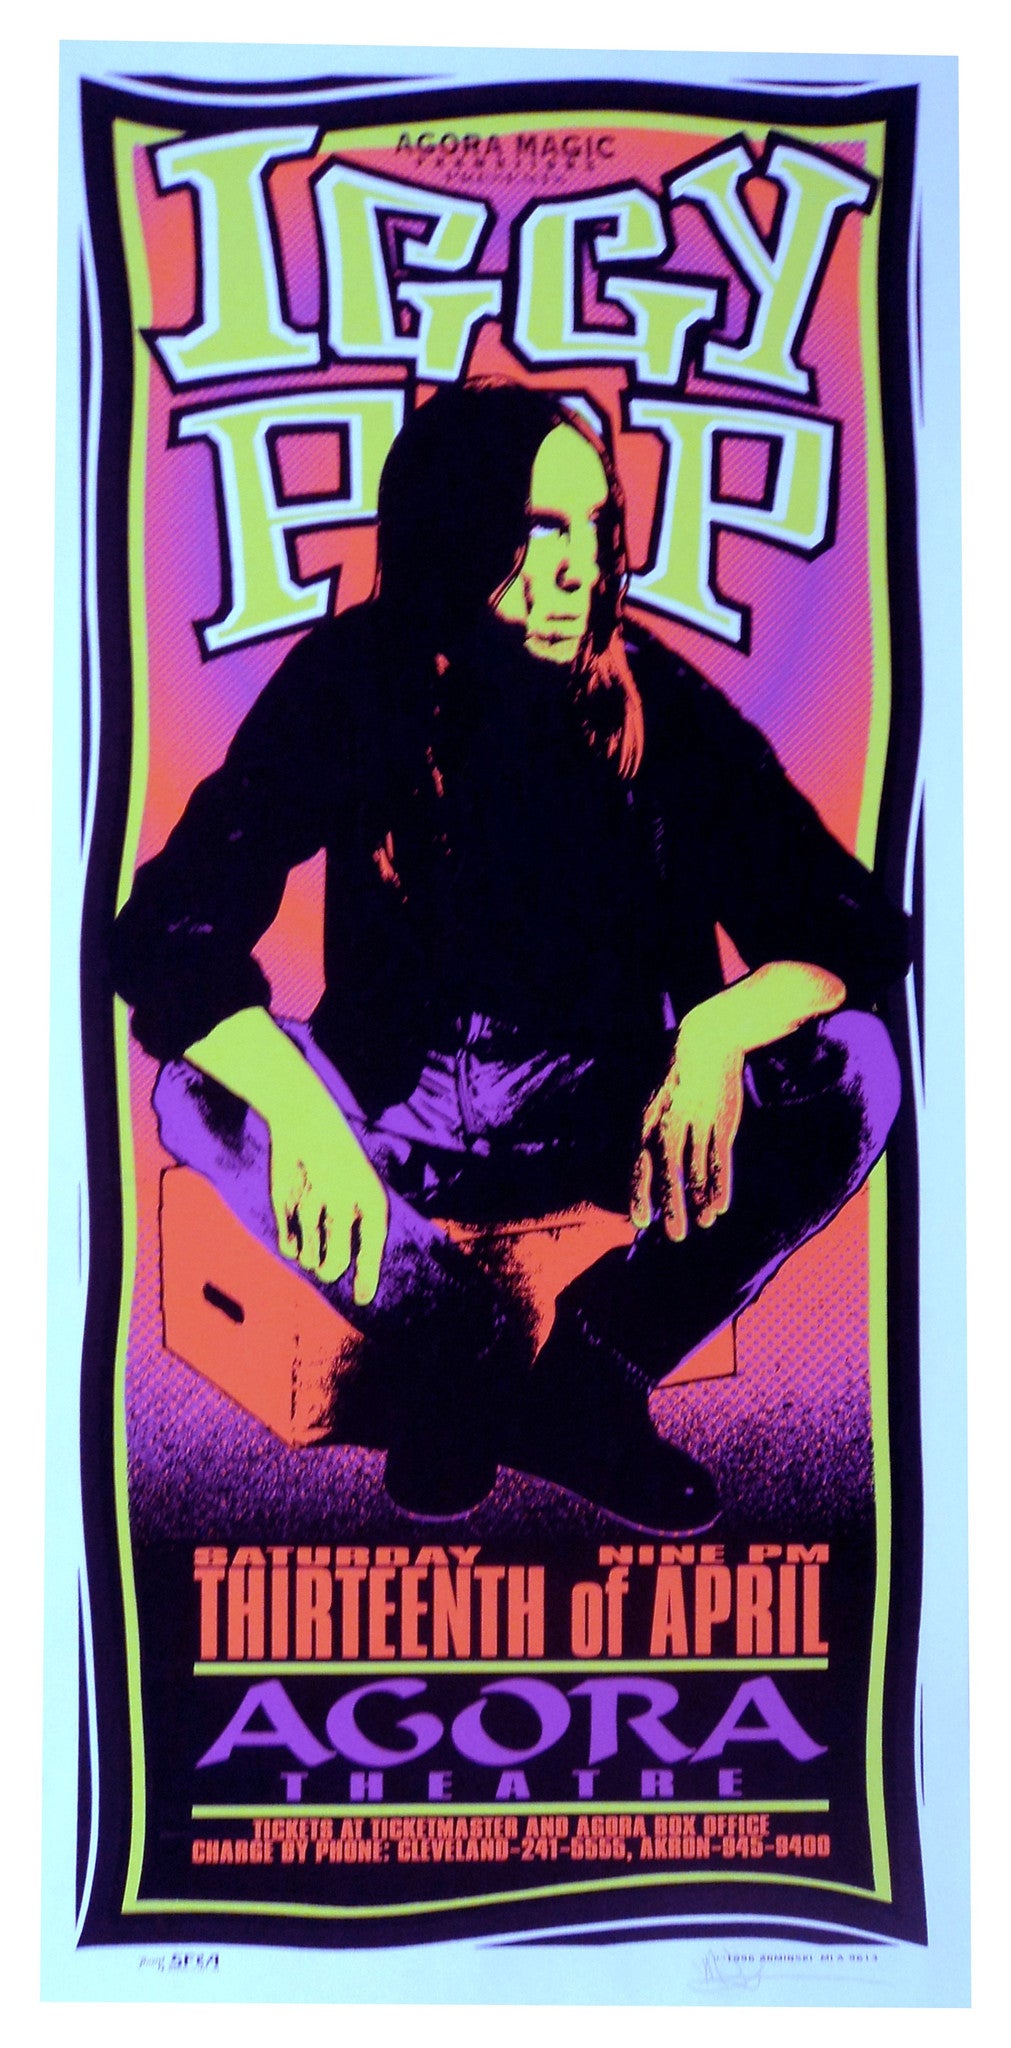 Mark Arminski - 1996 - Iggy Pop Concert Poster